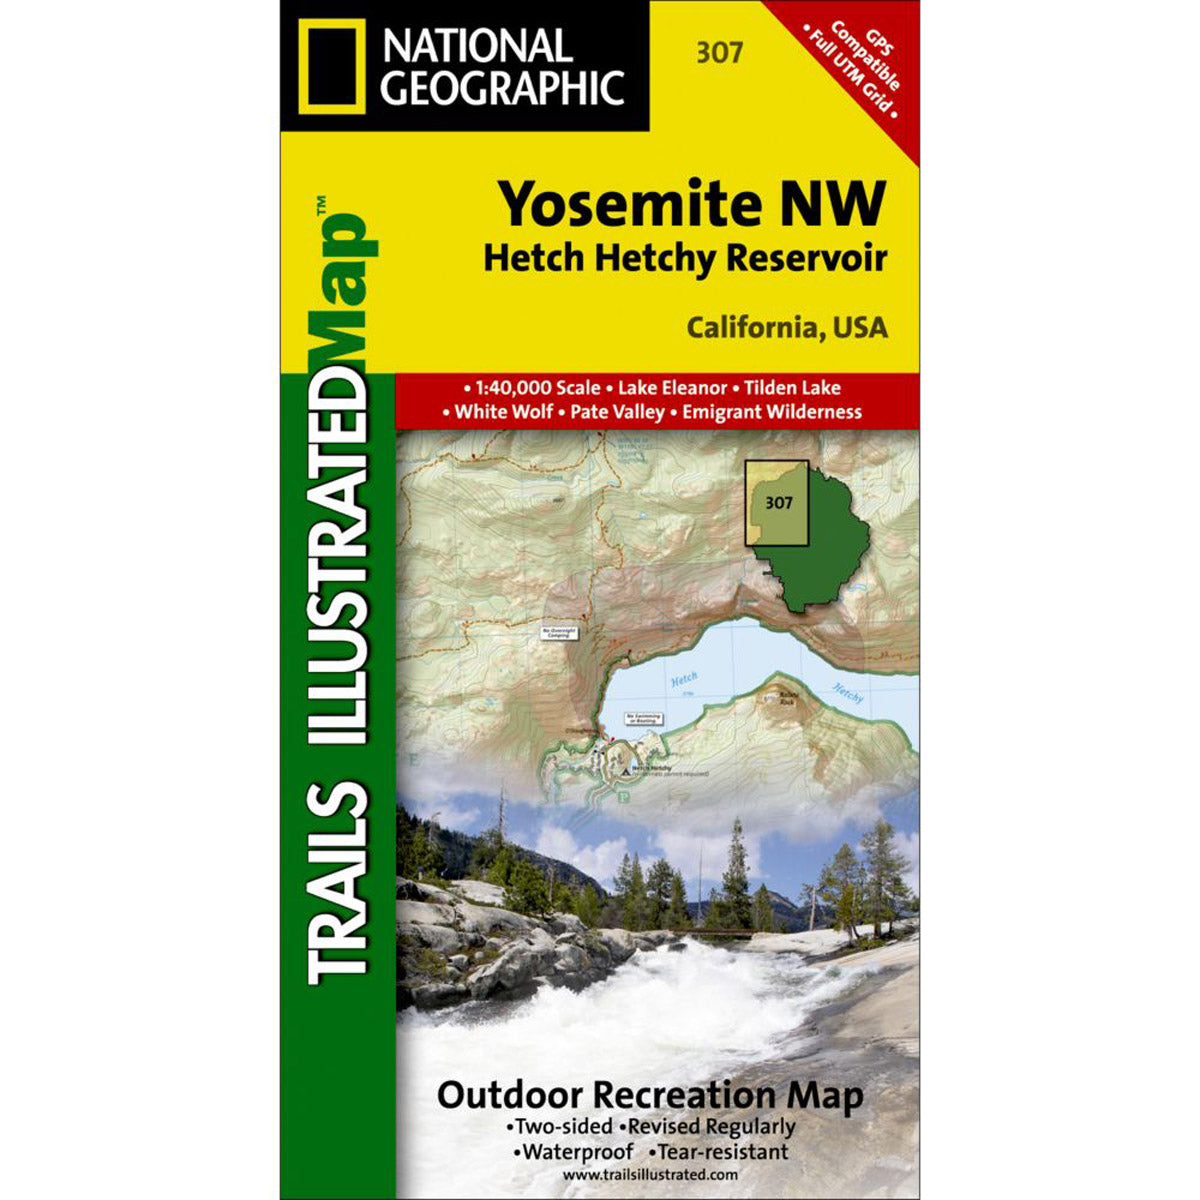 Yosemite NW: Hetch Hetchy Reservoir